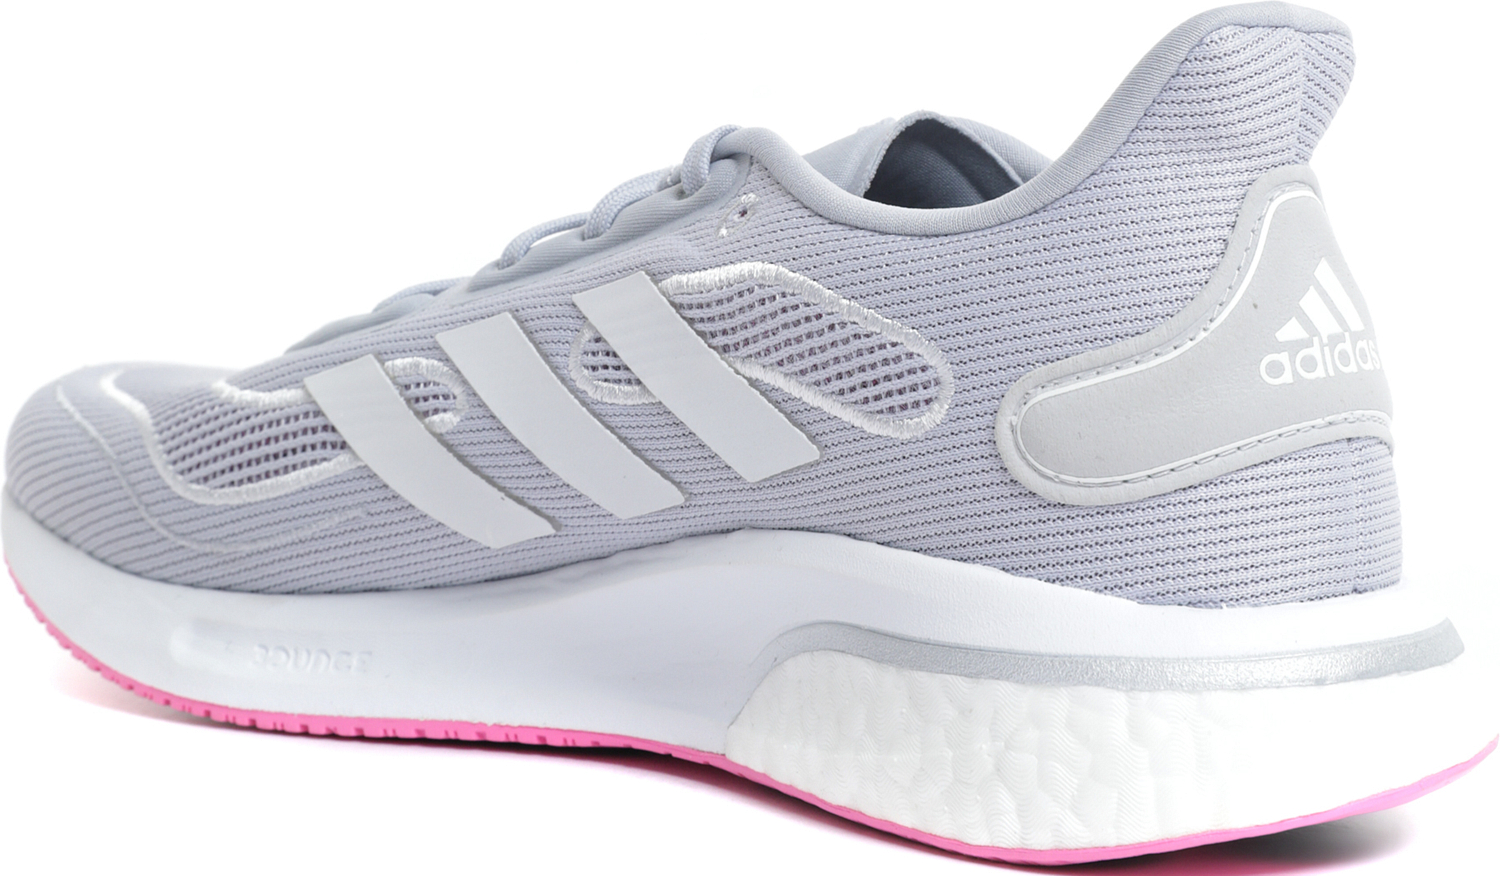 Беговые кроссовки Adidas Supernova W Hal Silver/Ftw White/Screwaming Pink